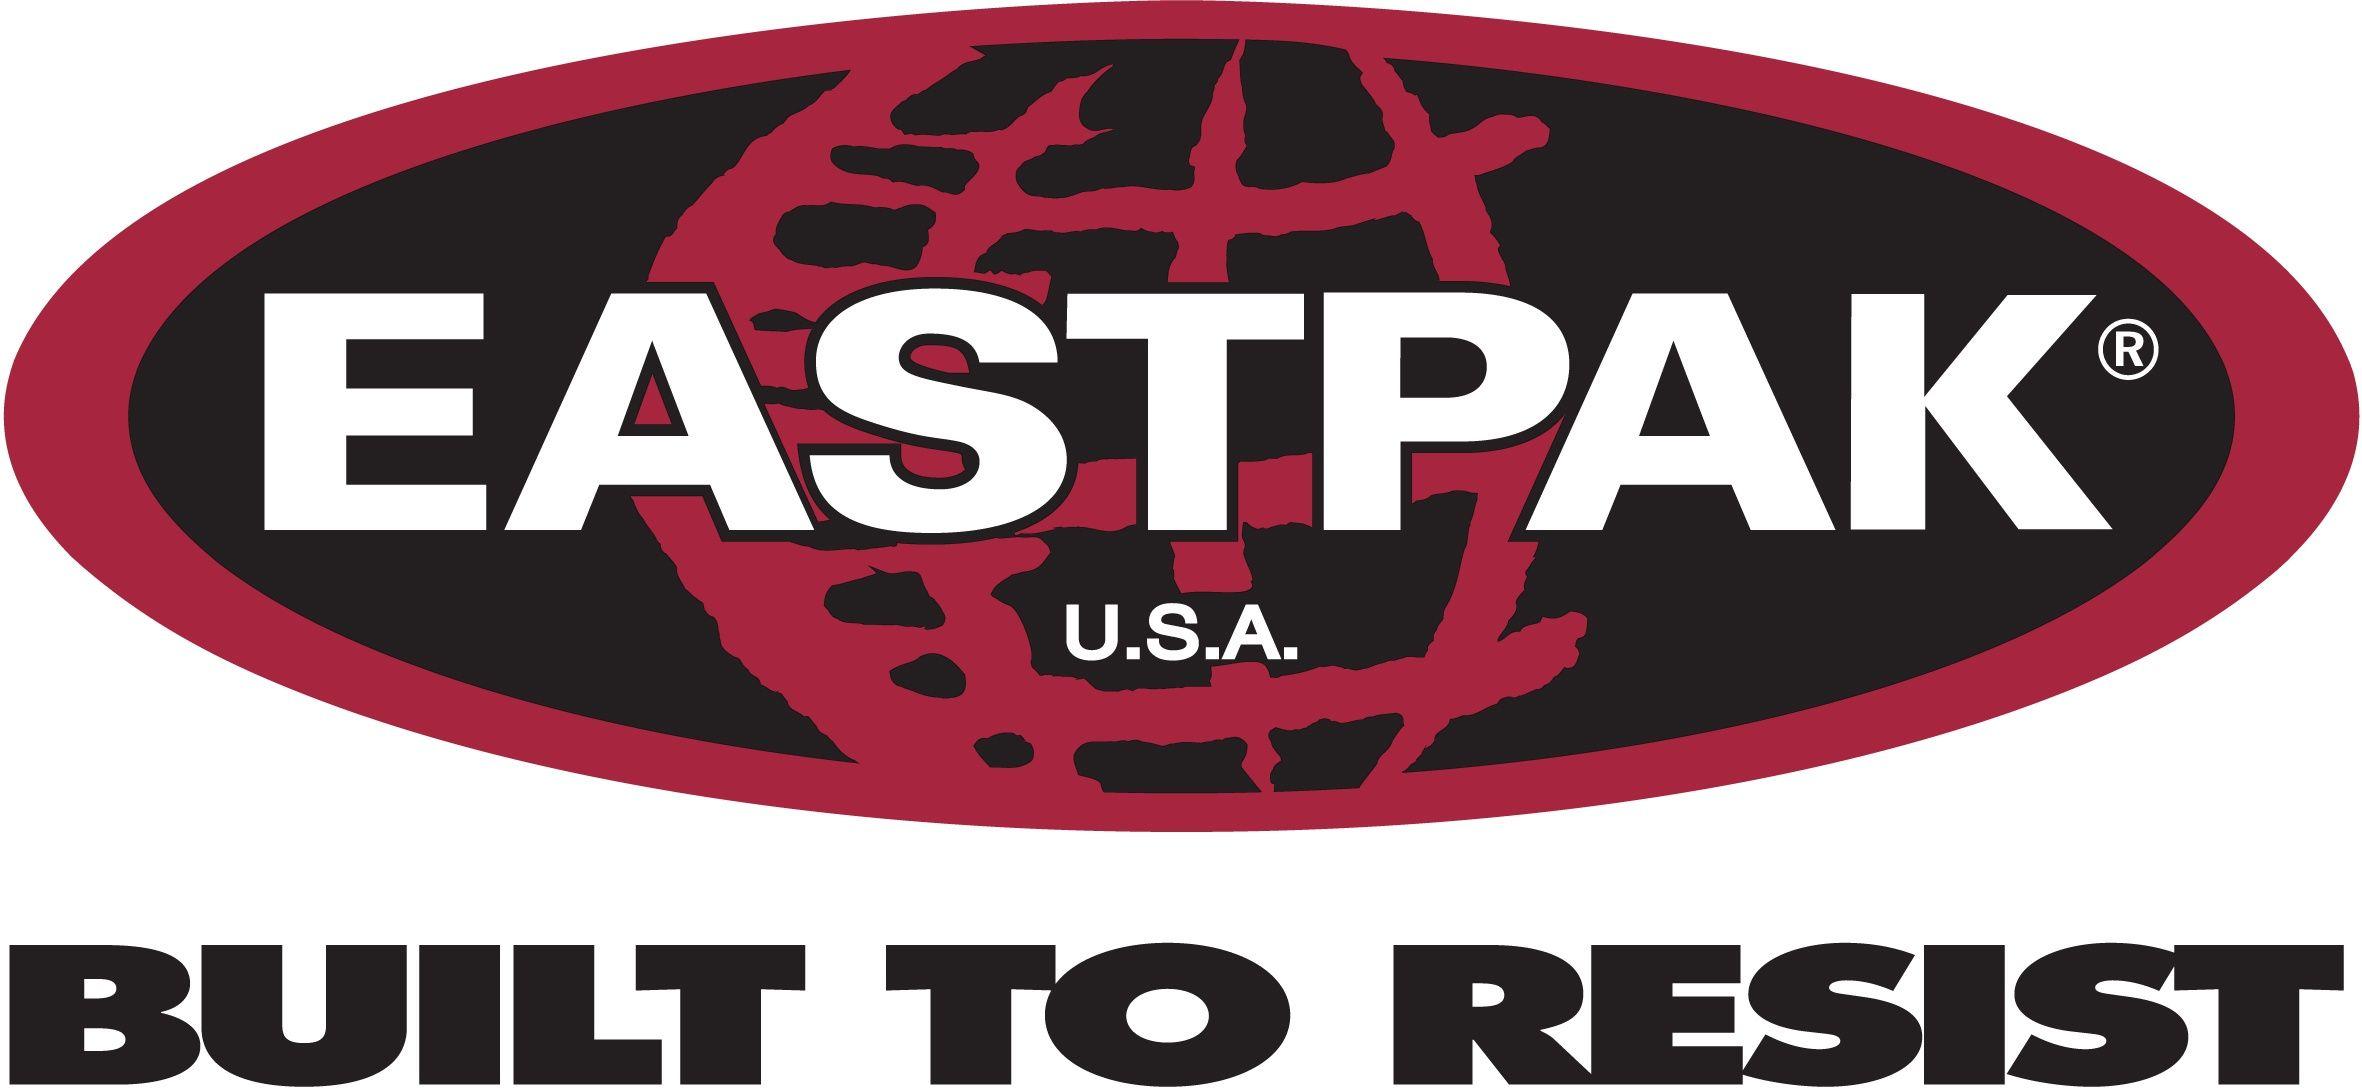 Eastpak Logo - Eastpak U.S.A Logo | shirt inspiration | Logo quiz games, Logos, Bad ...